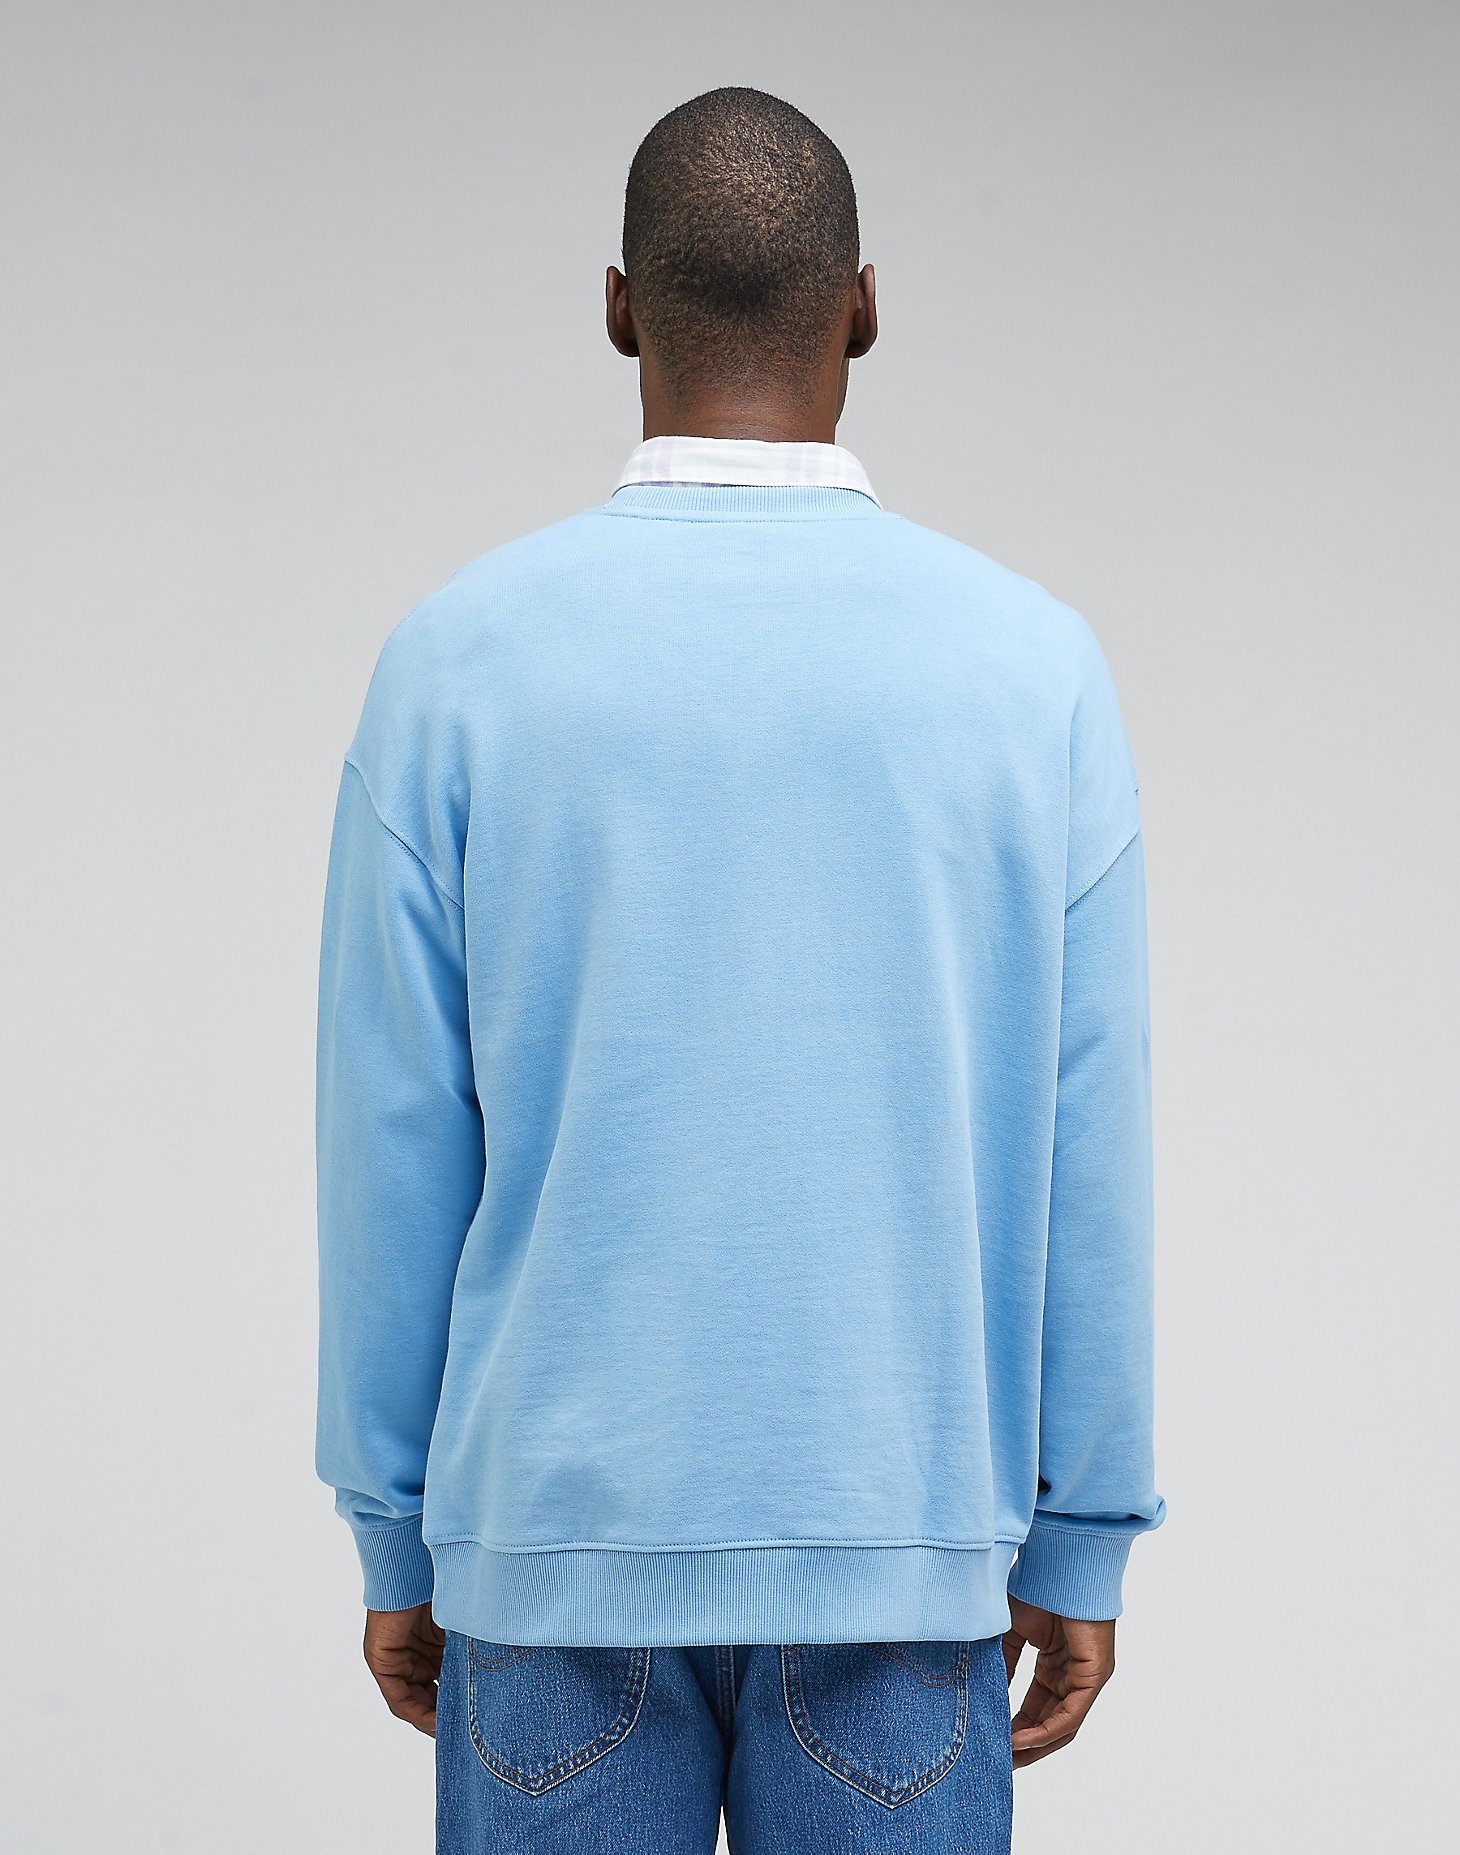 Core Loose Sweatshirt in Prep Blue alternative view 1